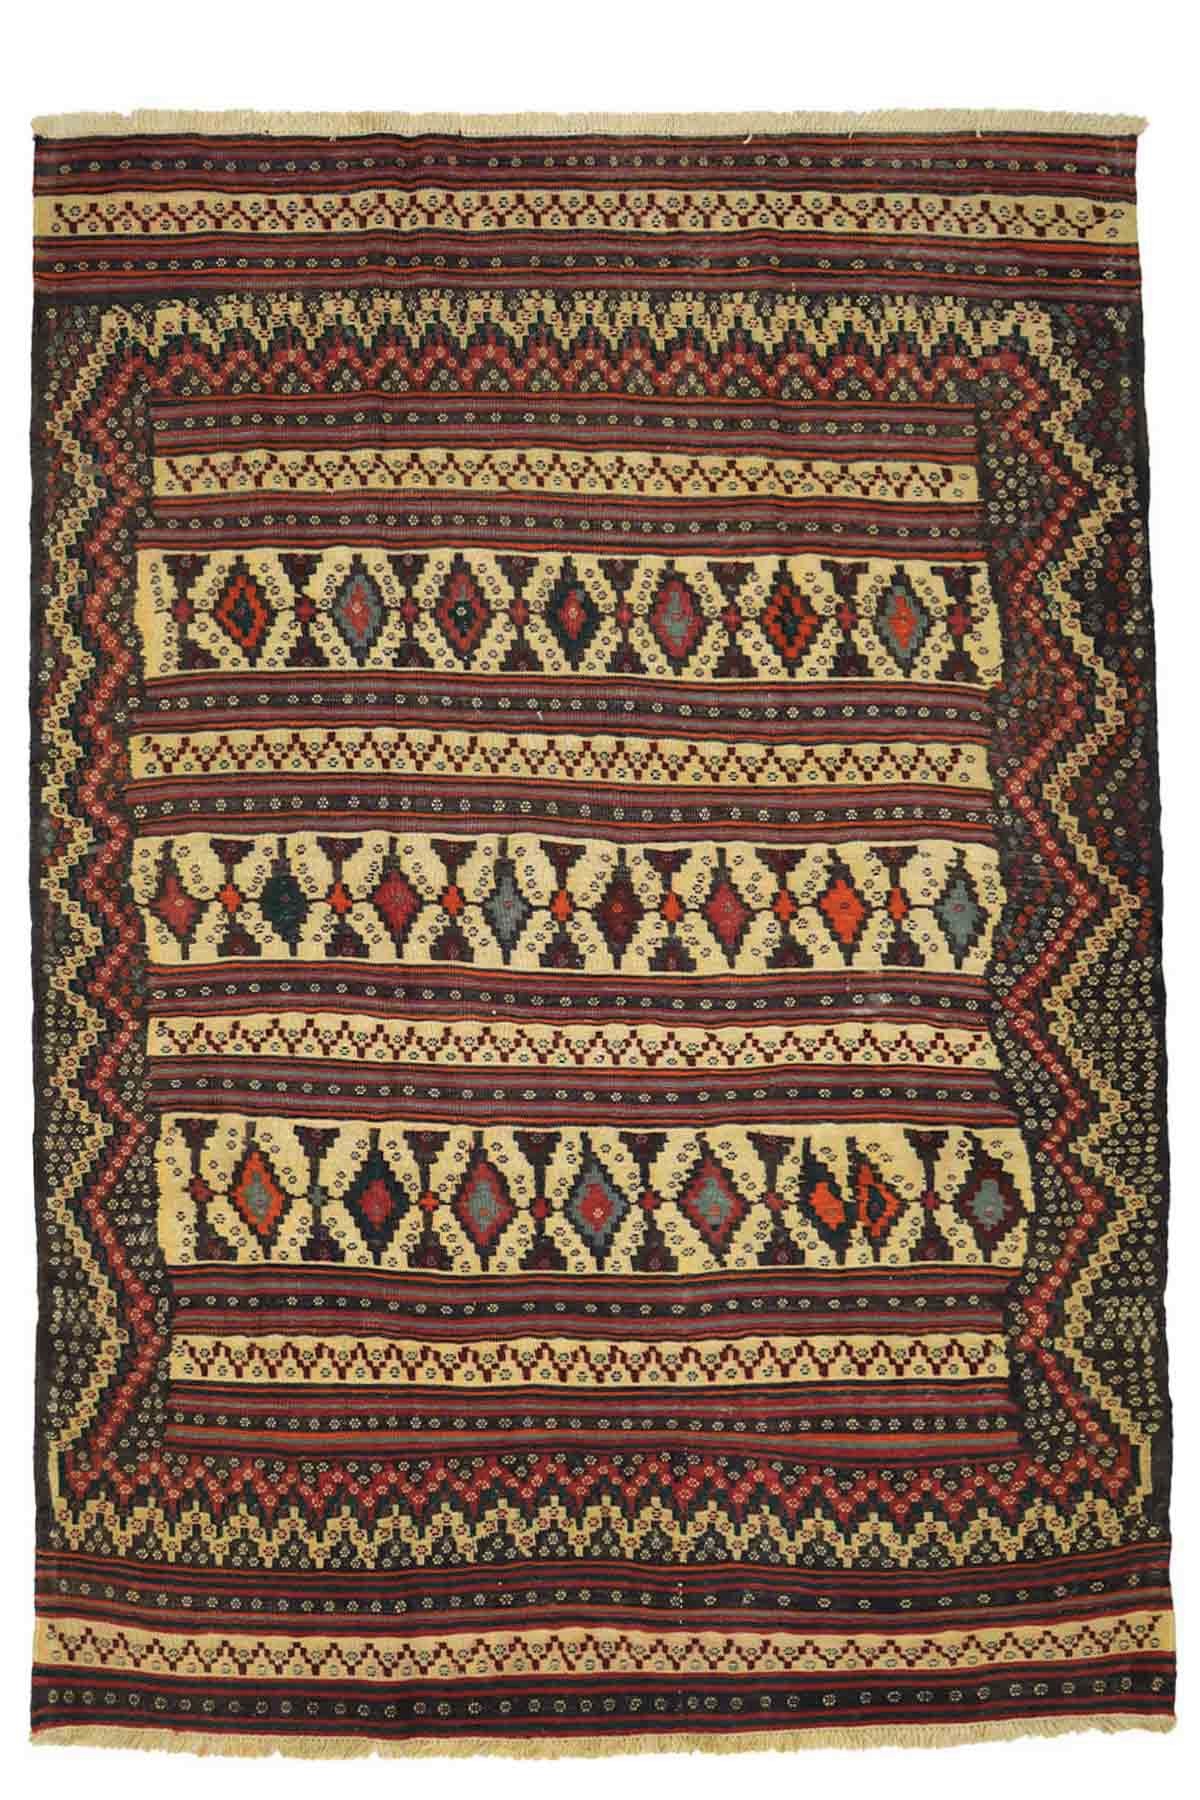 Handmade-and-Wool-Persian-Kilim